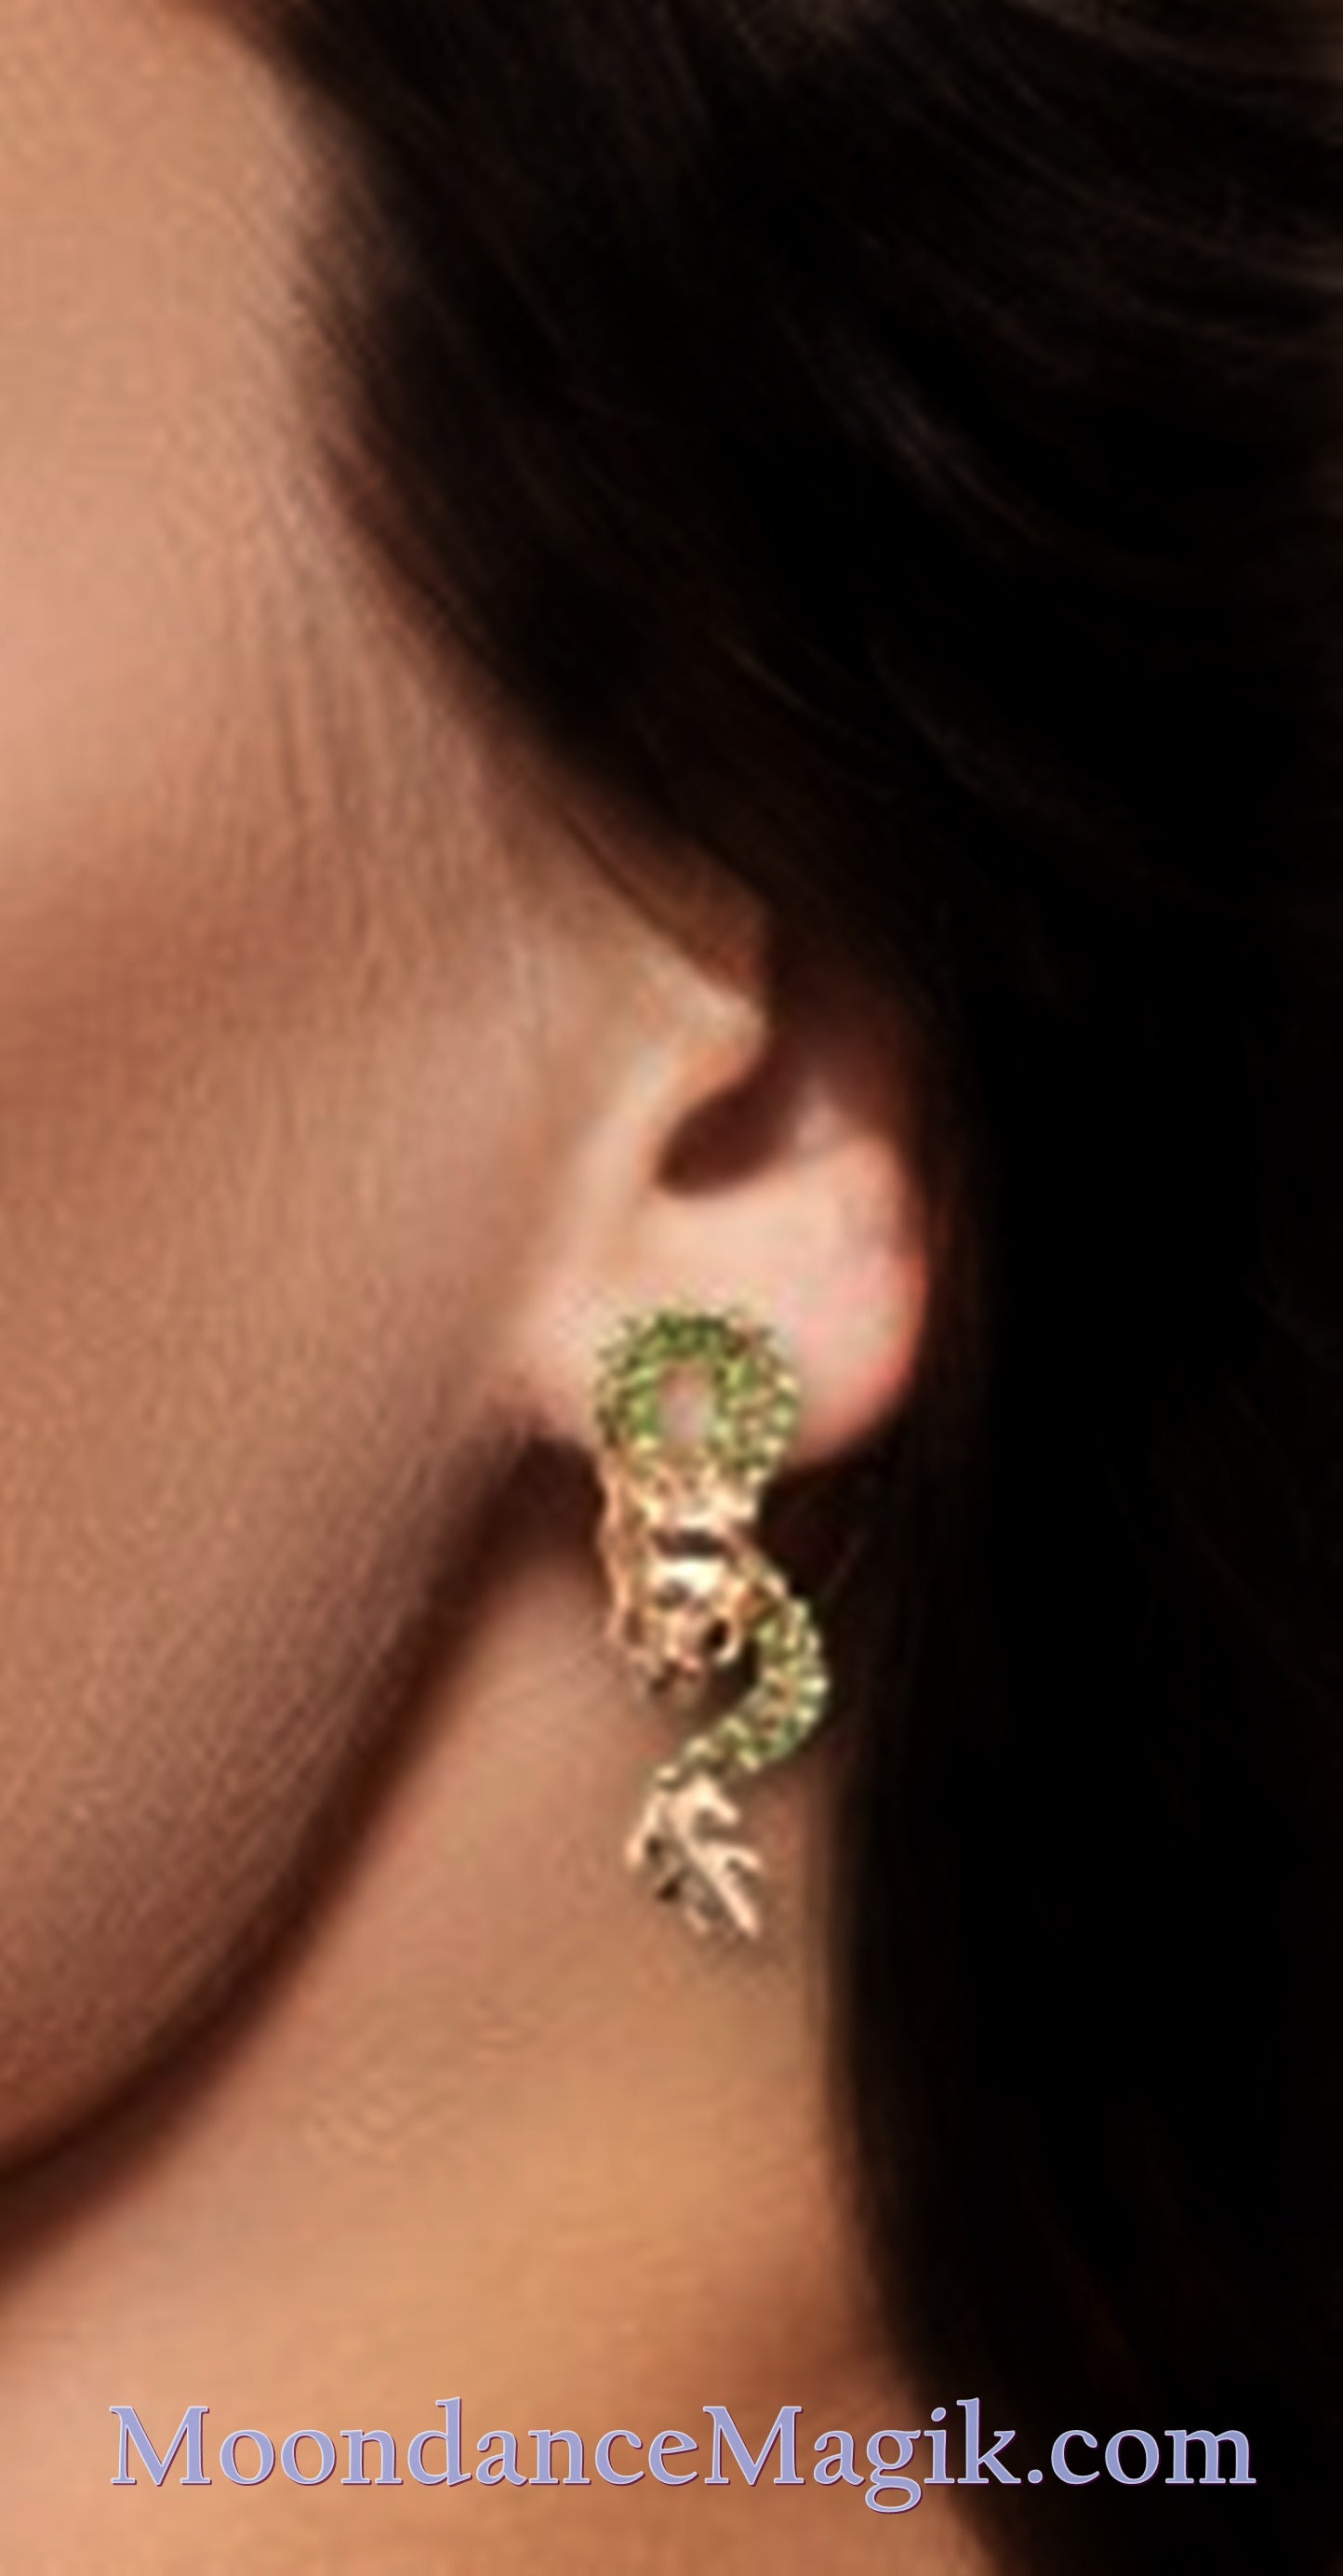 Austrian Crystal Dragon Stud Earrings